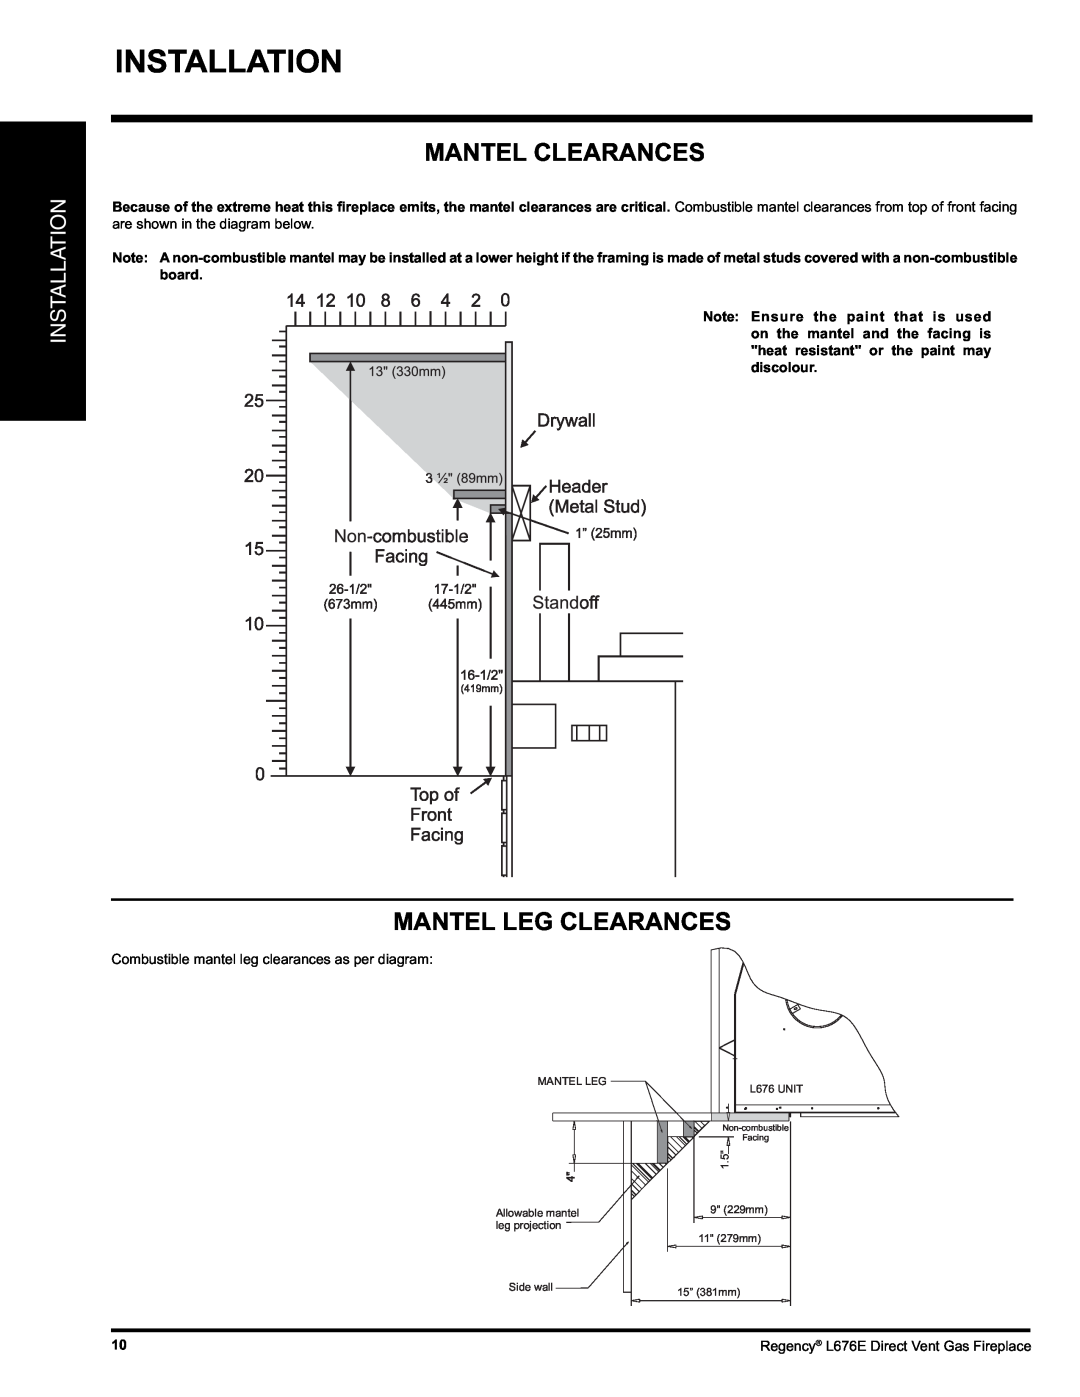 Regency L676E-LP, L676E-NG installation manual Installation, Mantel Clearances, Mantel Leg Clearances 